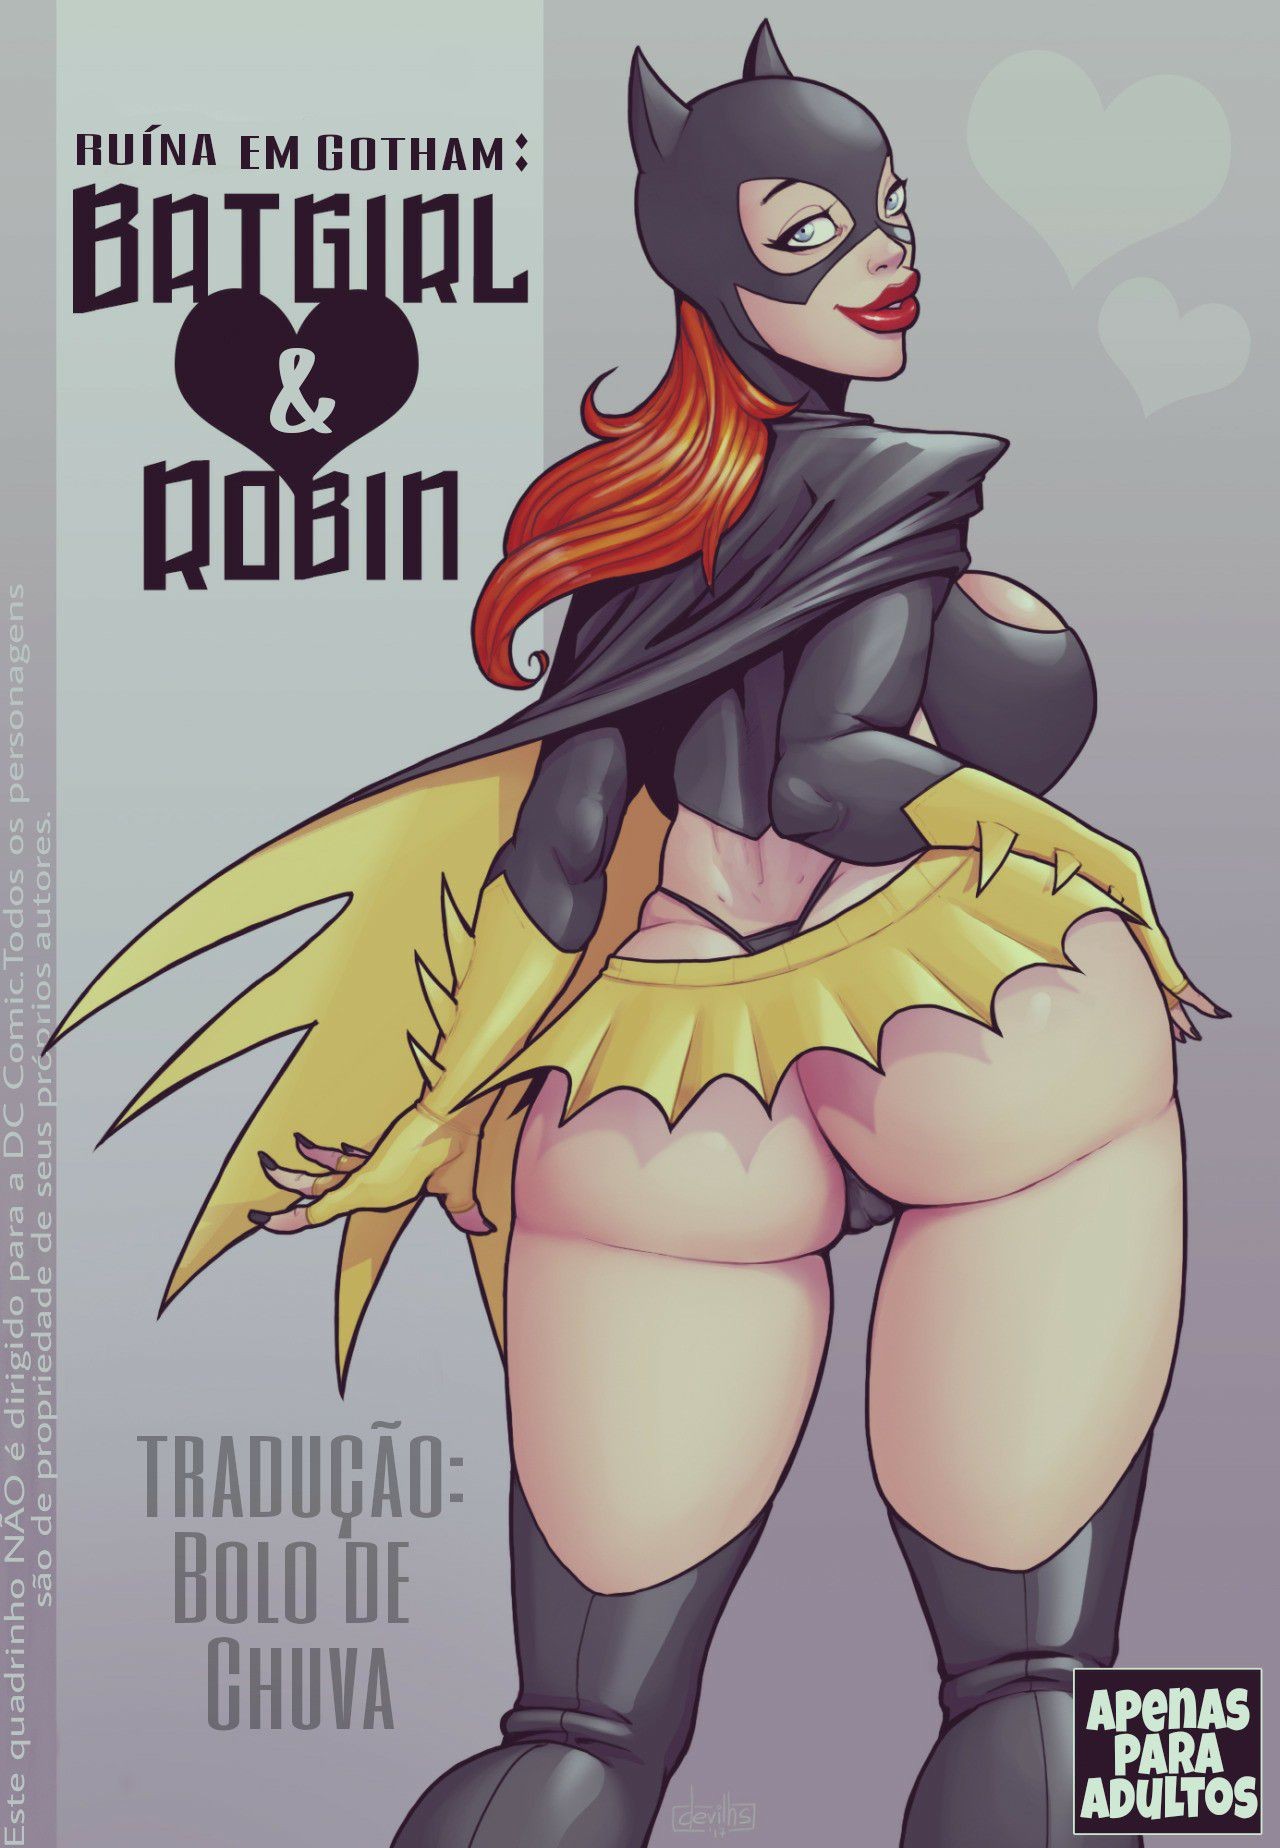 Realsex [DevilHS] Ruína Em Gotham - Batgirl & Robin (Portuguese) [DevilHS] Ruined Gotham - Batgirl Loves Robin (English) Glam